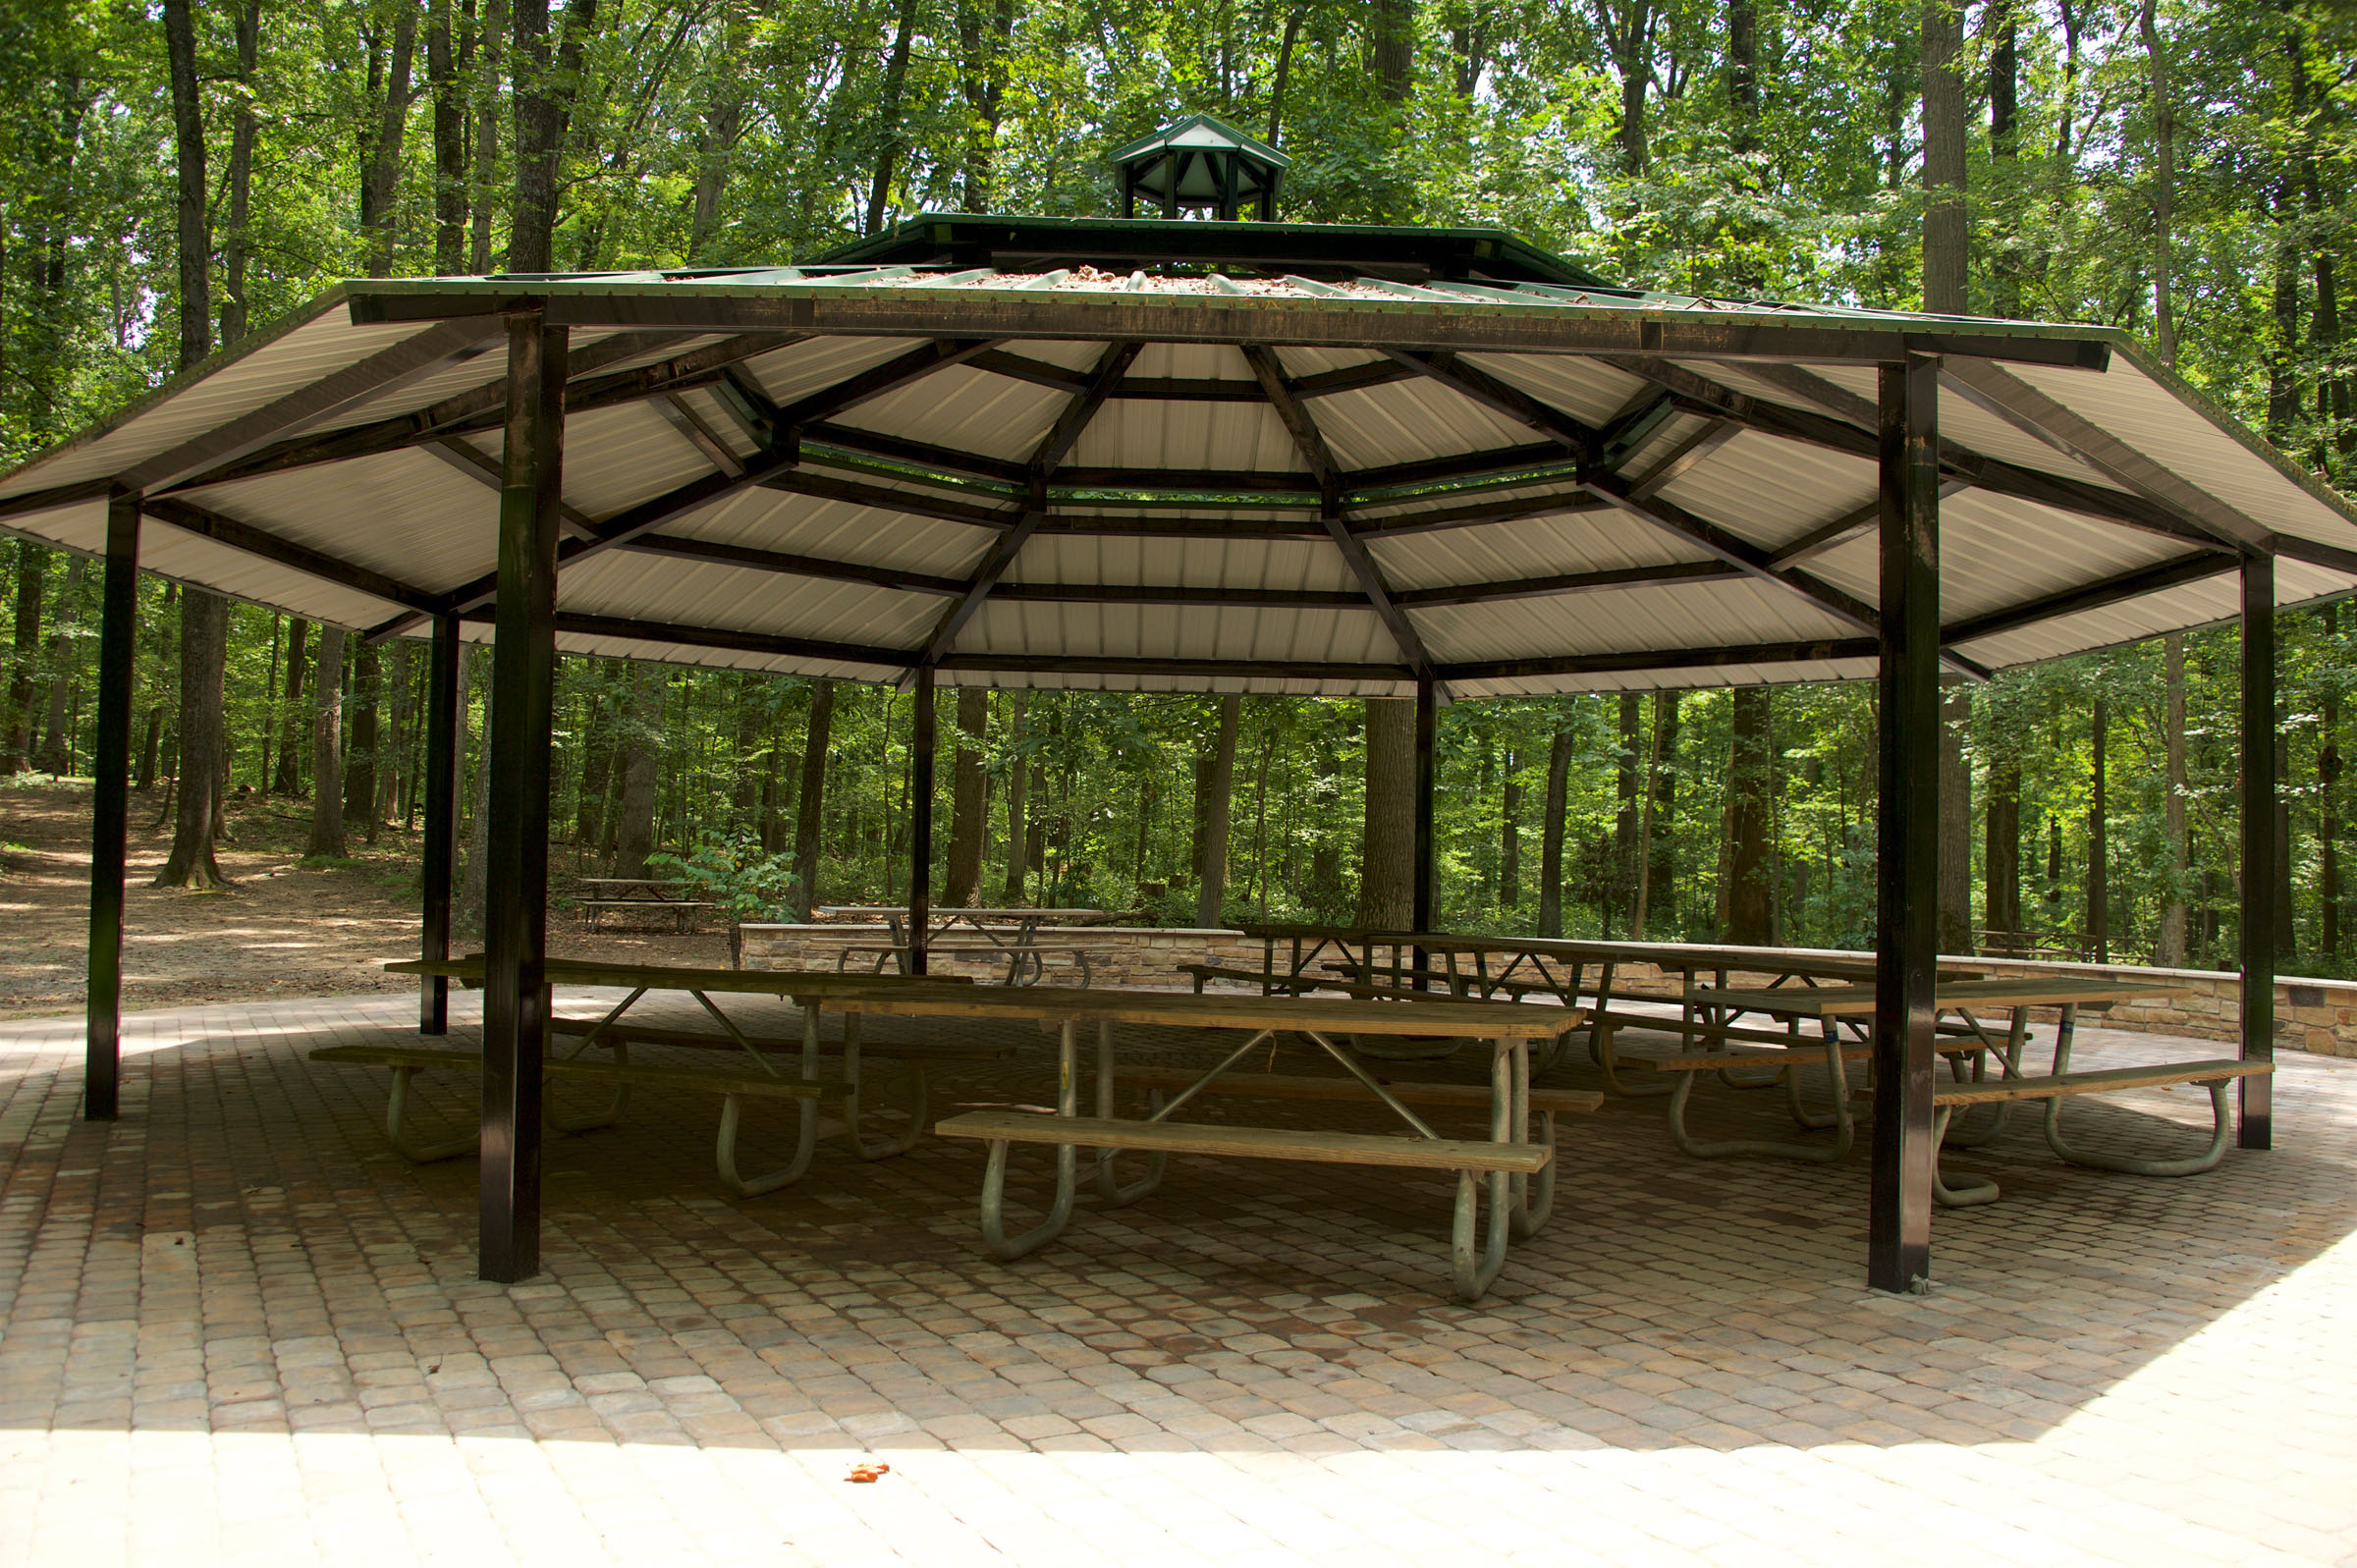 Cabin John Regional Park